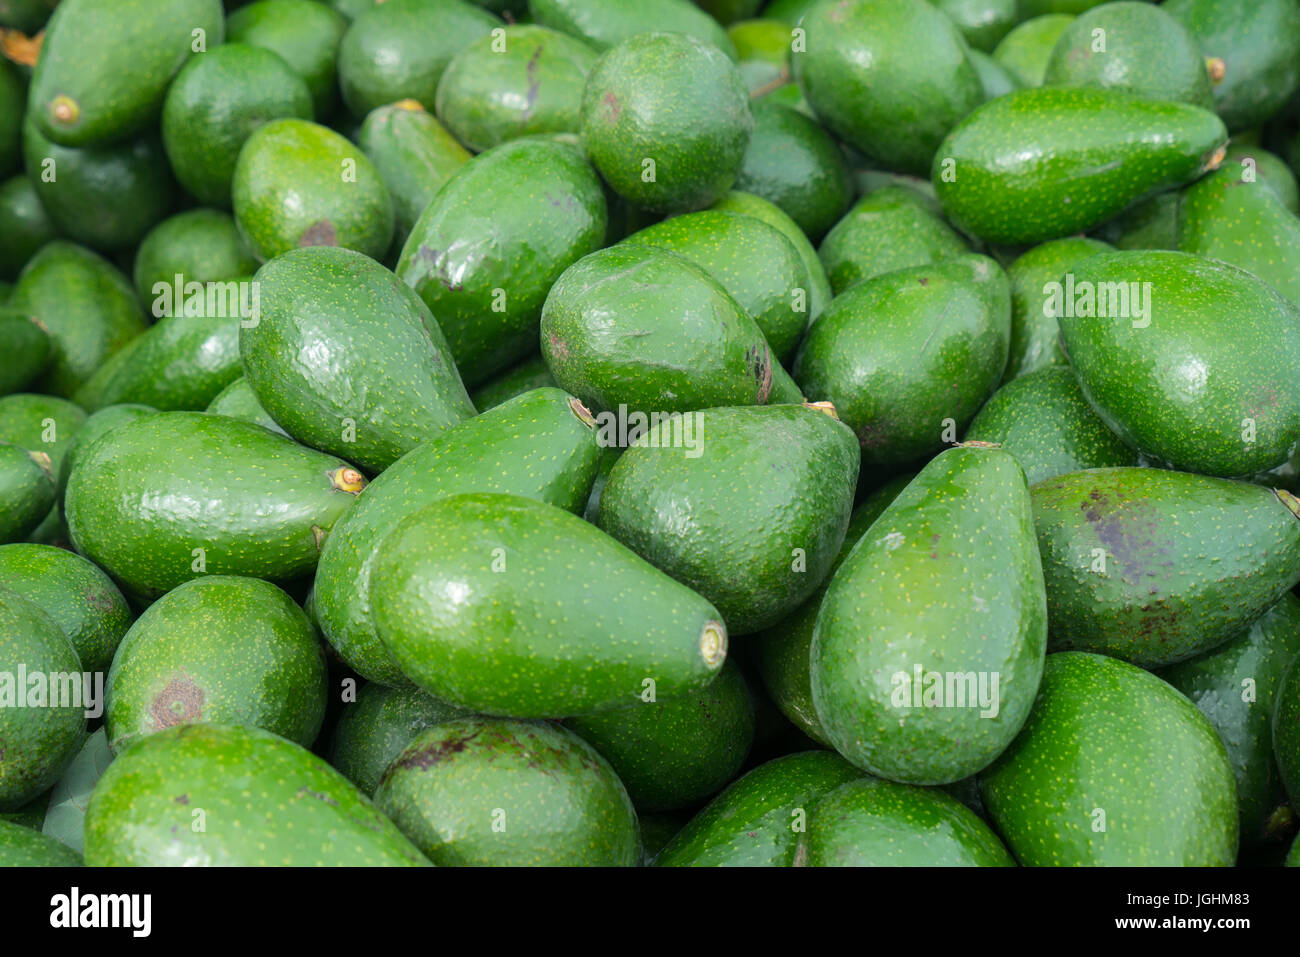 Fresh Avocados in a Produce Market Stock Photo